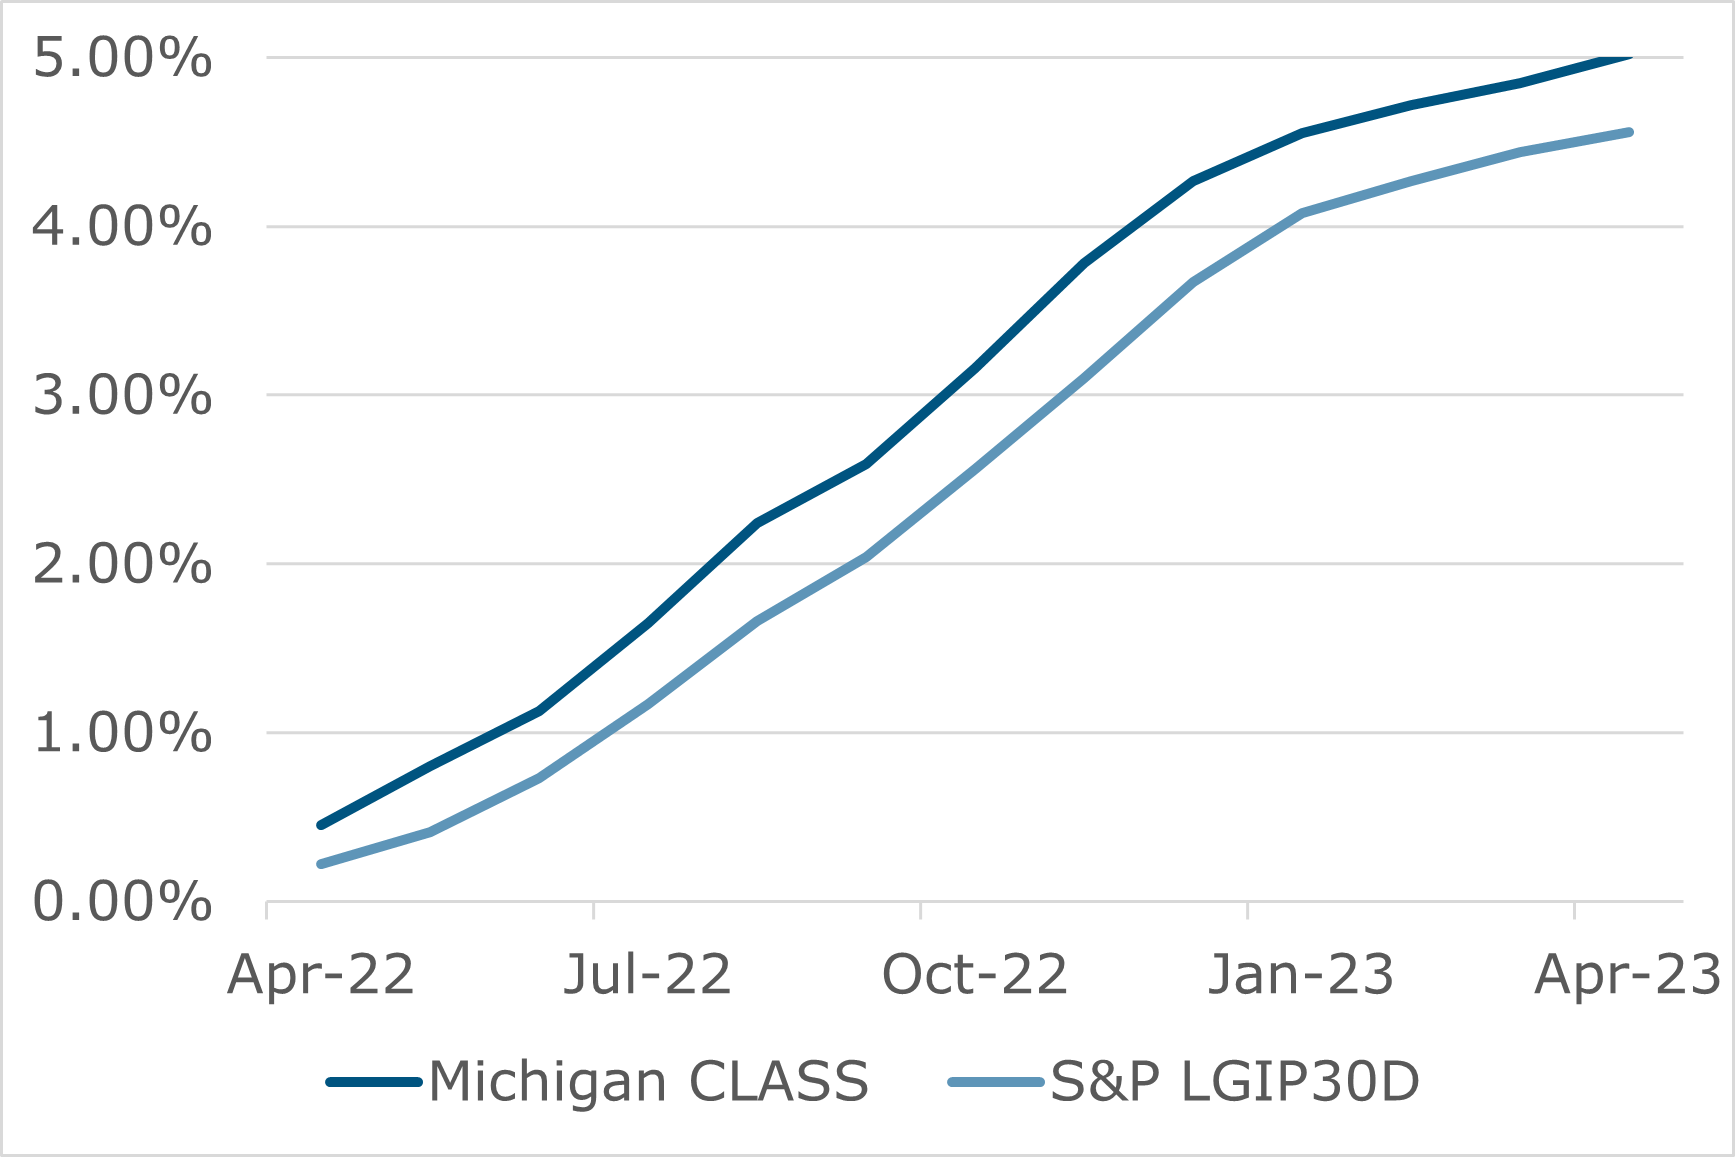 04.23 - Michigan CLASS Performance